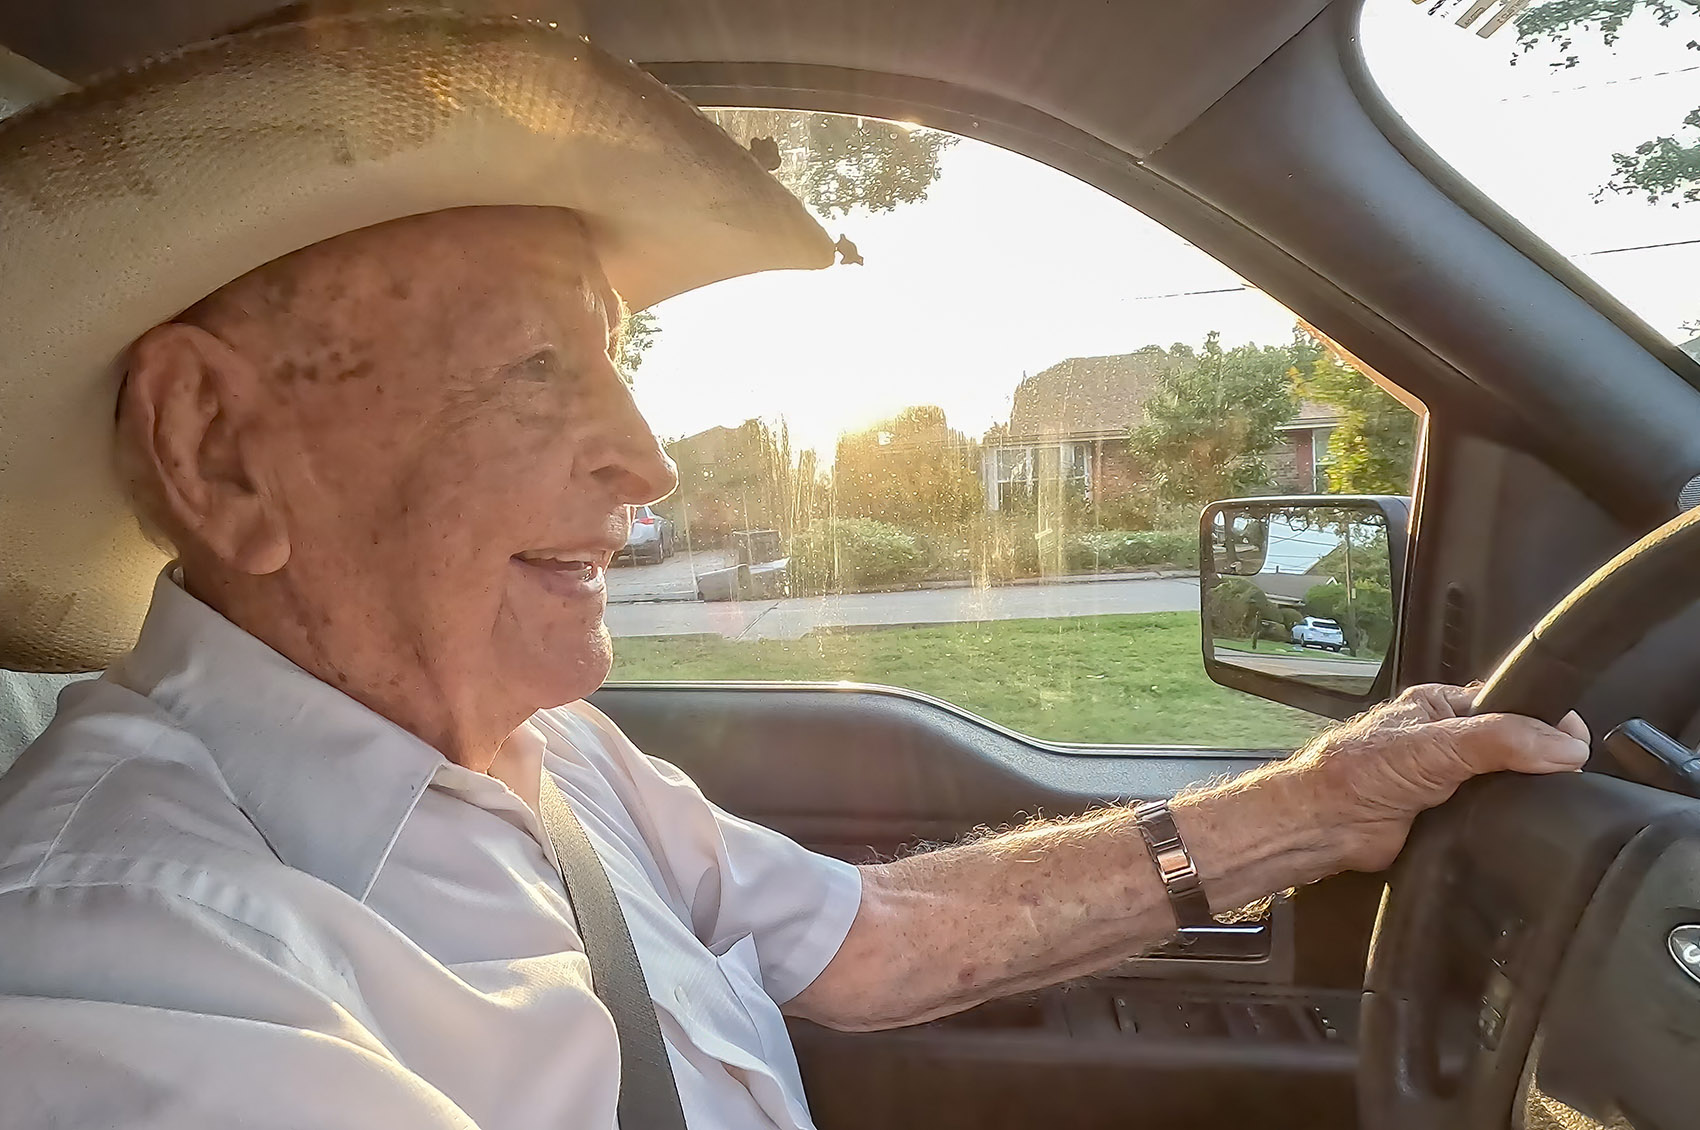 elderly man wearing straw hat driving vehicle